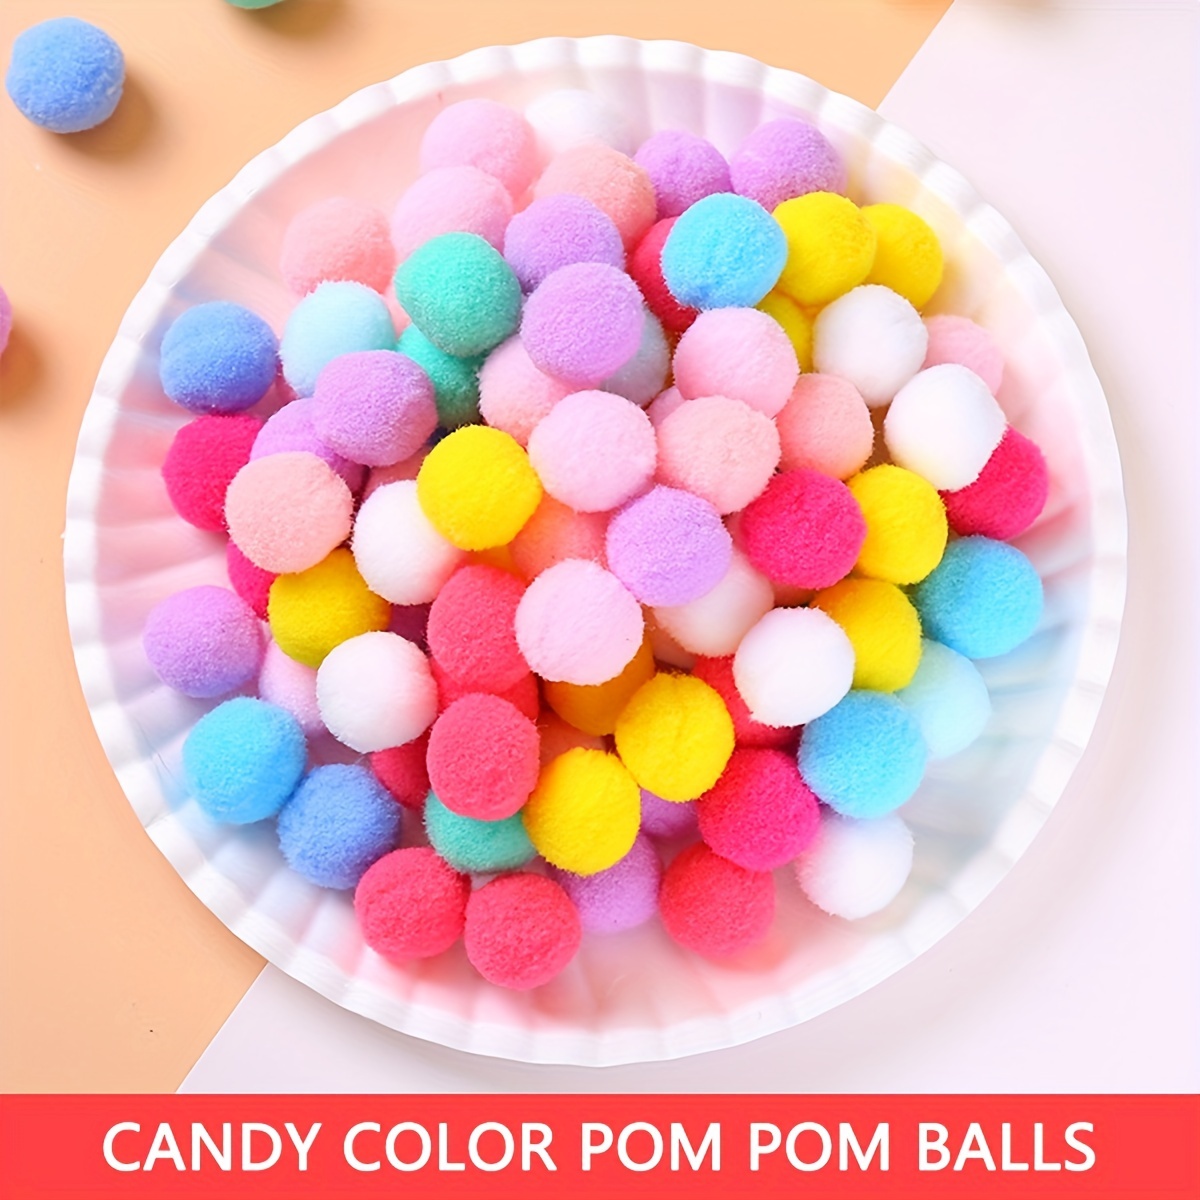 20pcs Craft Pom Poms Multicolor Bulk Pom Poms Arts And Crafts, Pompoms For  Crafts In Assorted Size- Soft And Fluffy Puff Balls,2.03cm Colors Pompoms